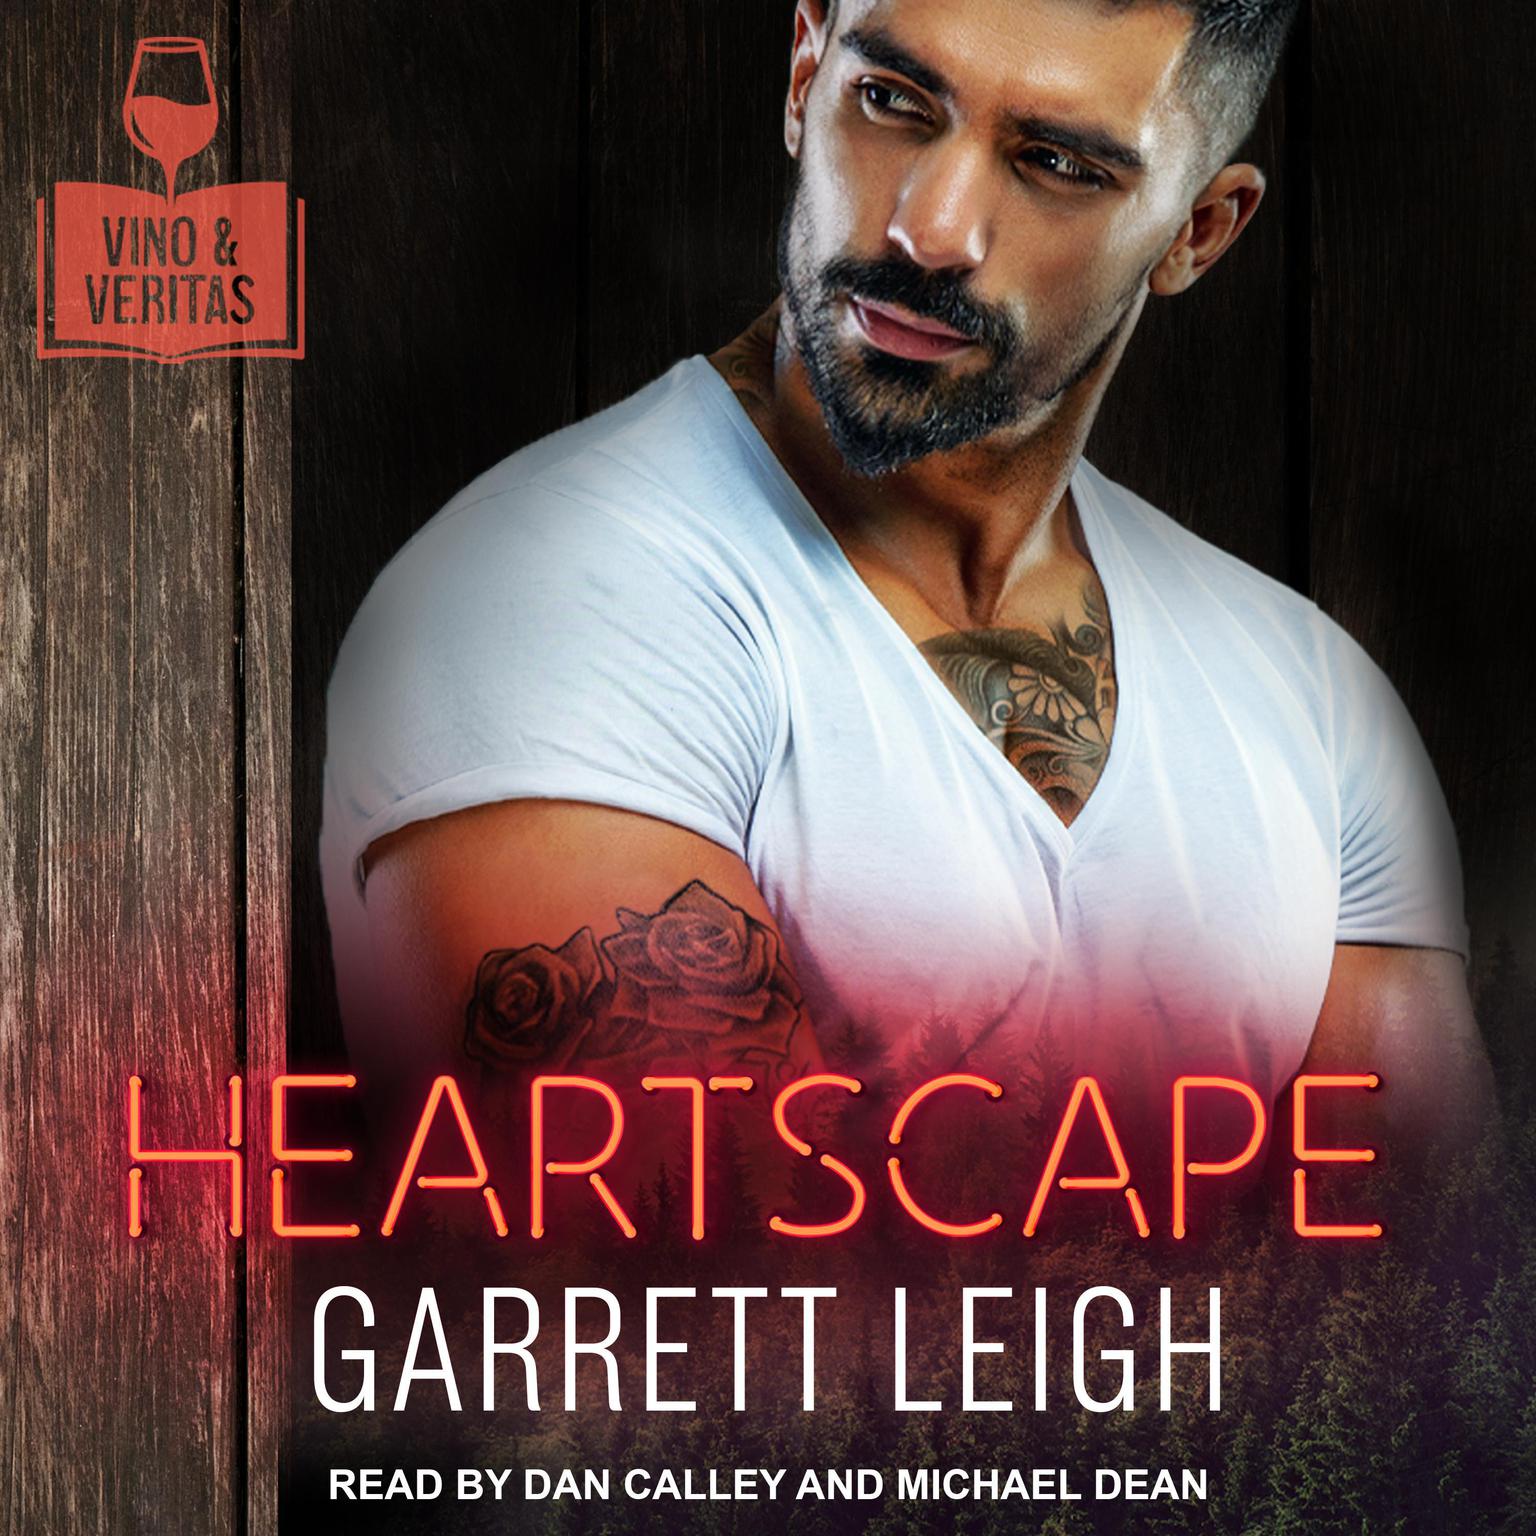 Heartscape Audiobook, by Garrett Leigh